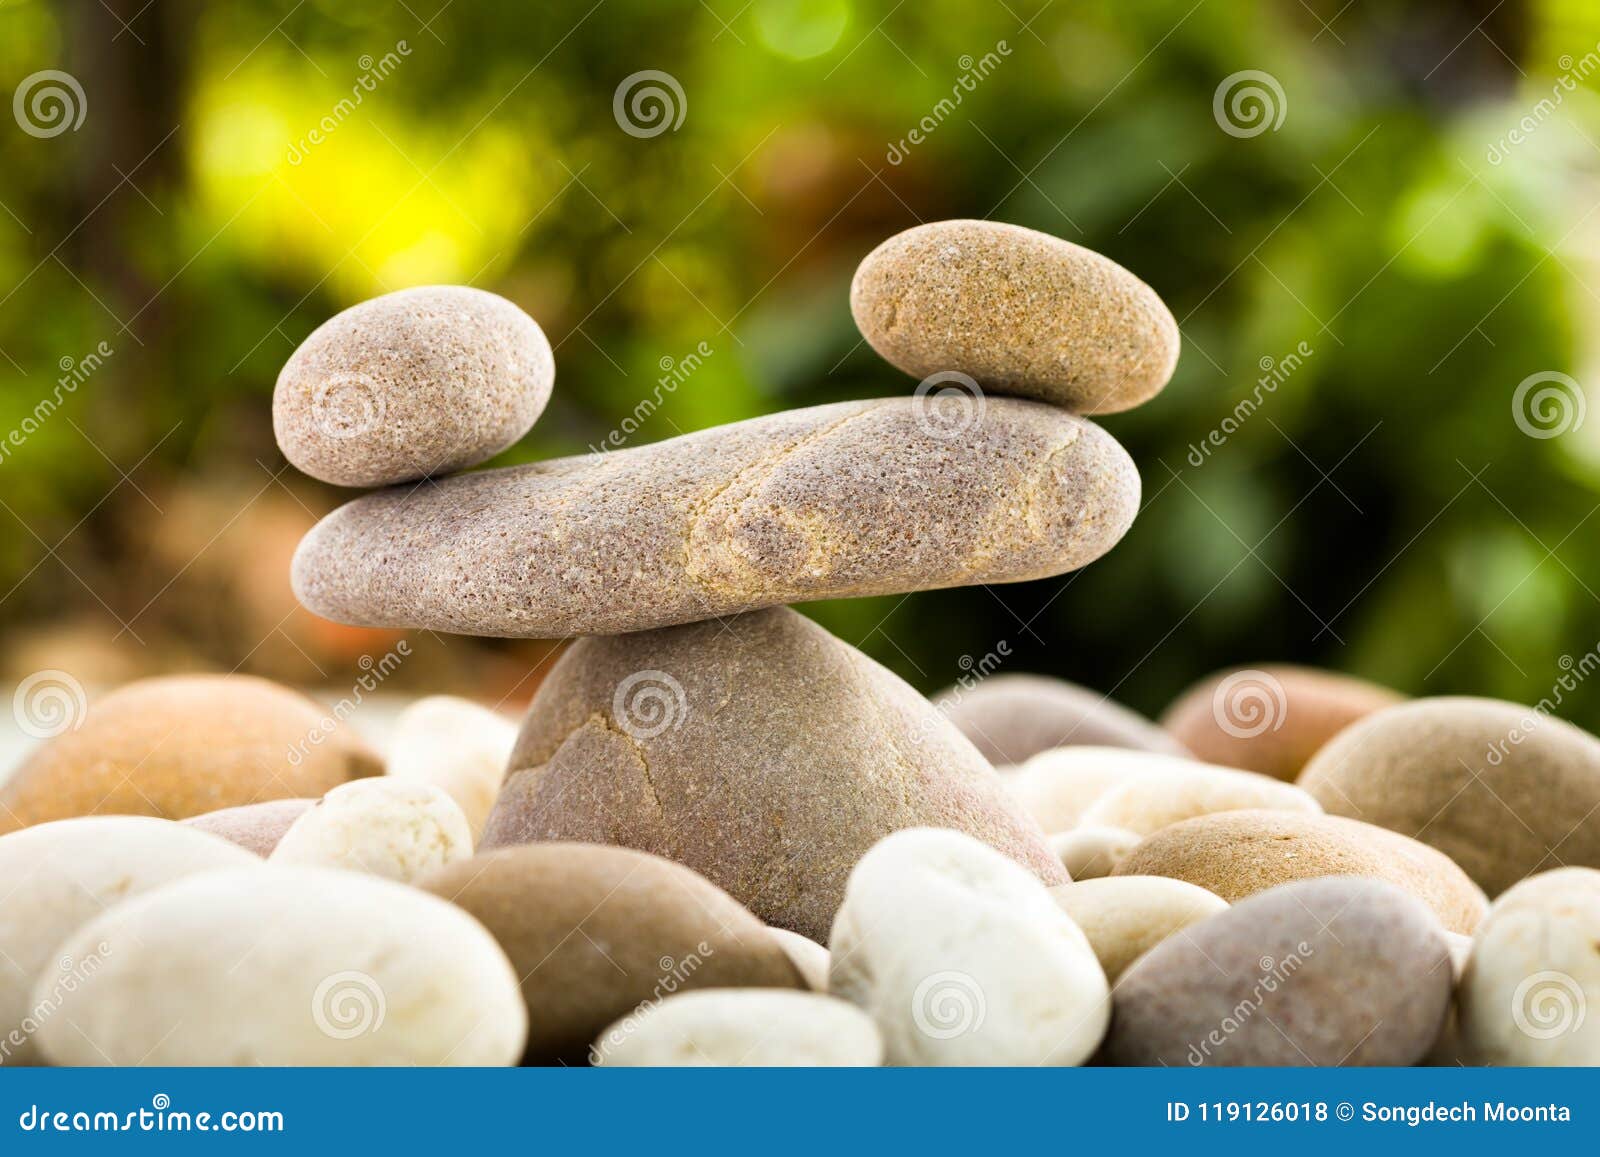 zen stacked stones on nature background